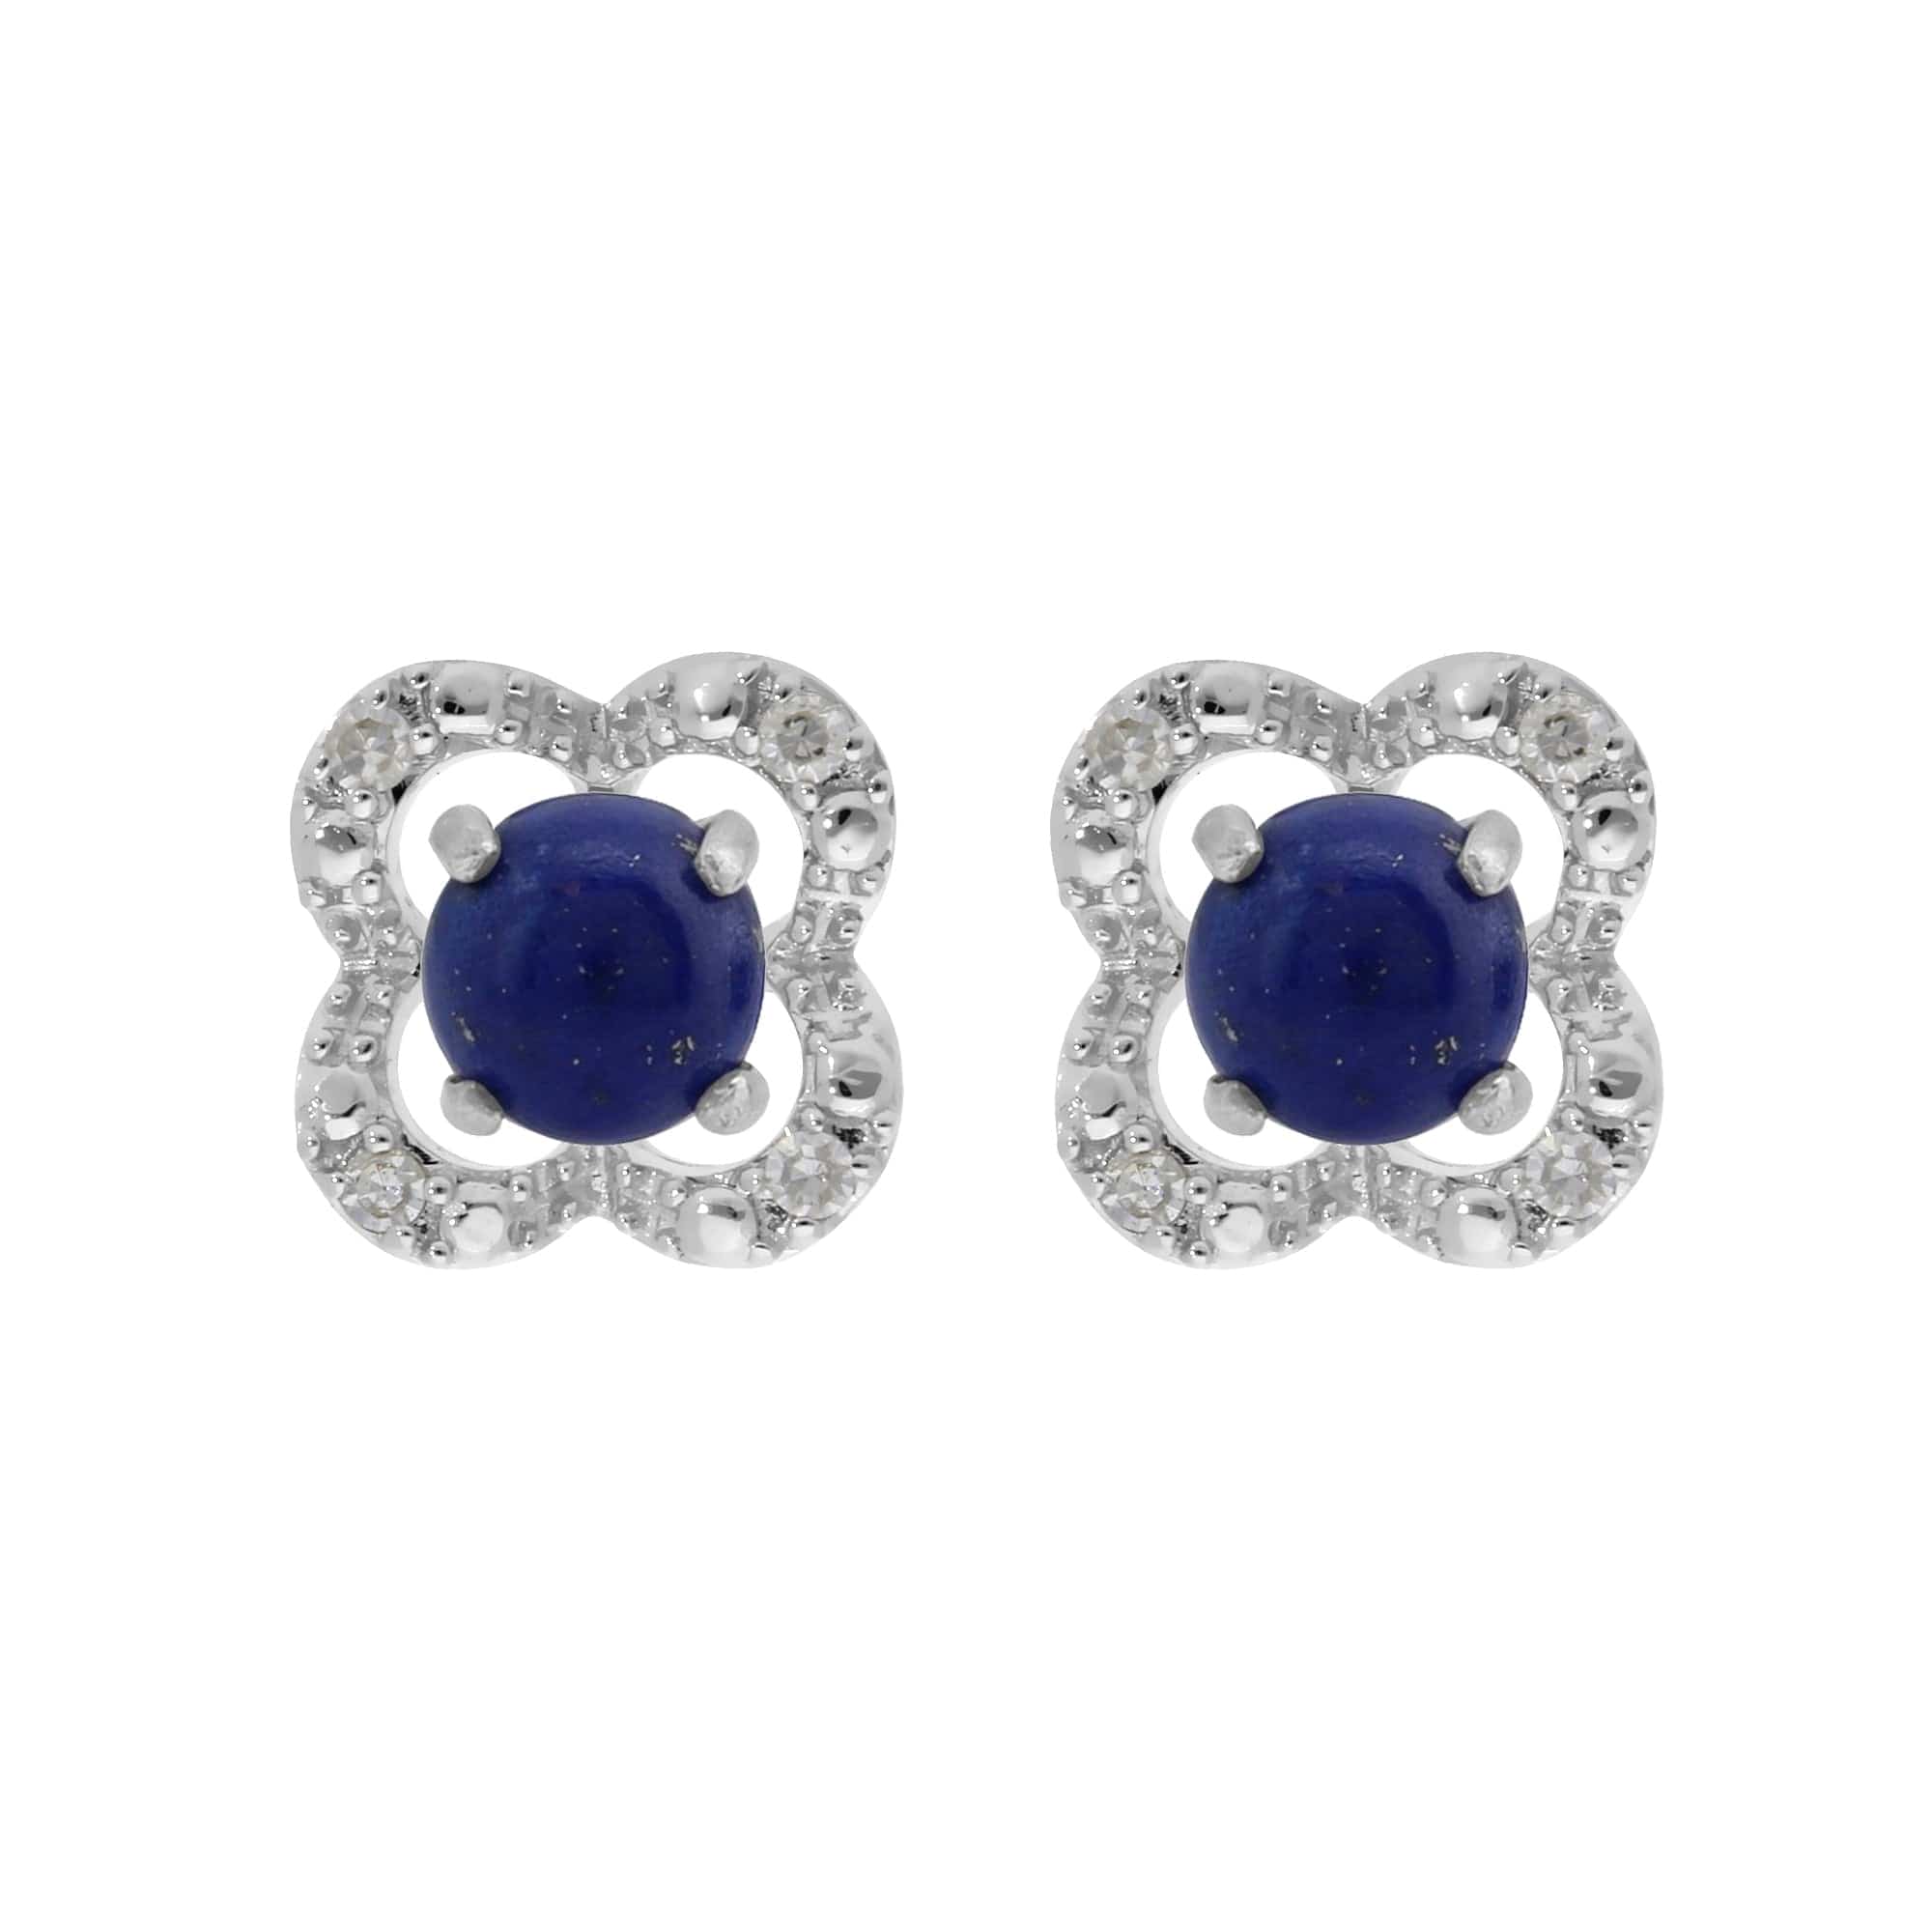 162E0071199-162E0244019 Classic Round Lapis Lazuli Studs with Detachable Diamond Flower Ear Jacket in 9ct White Gold 1